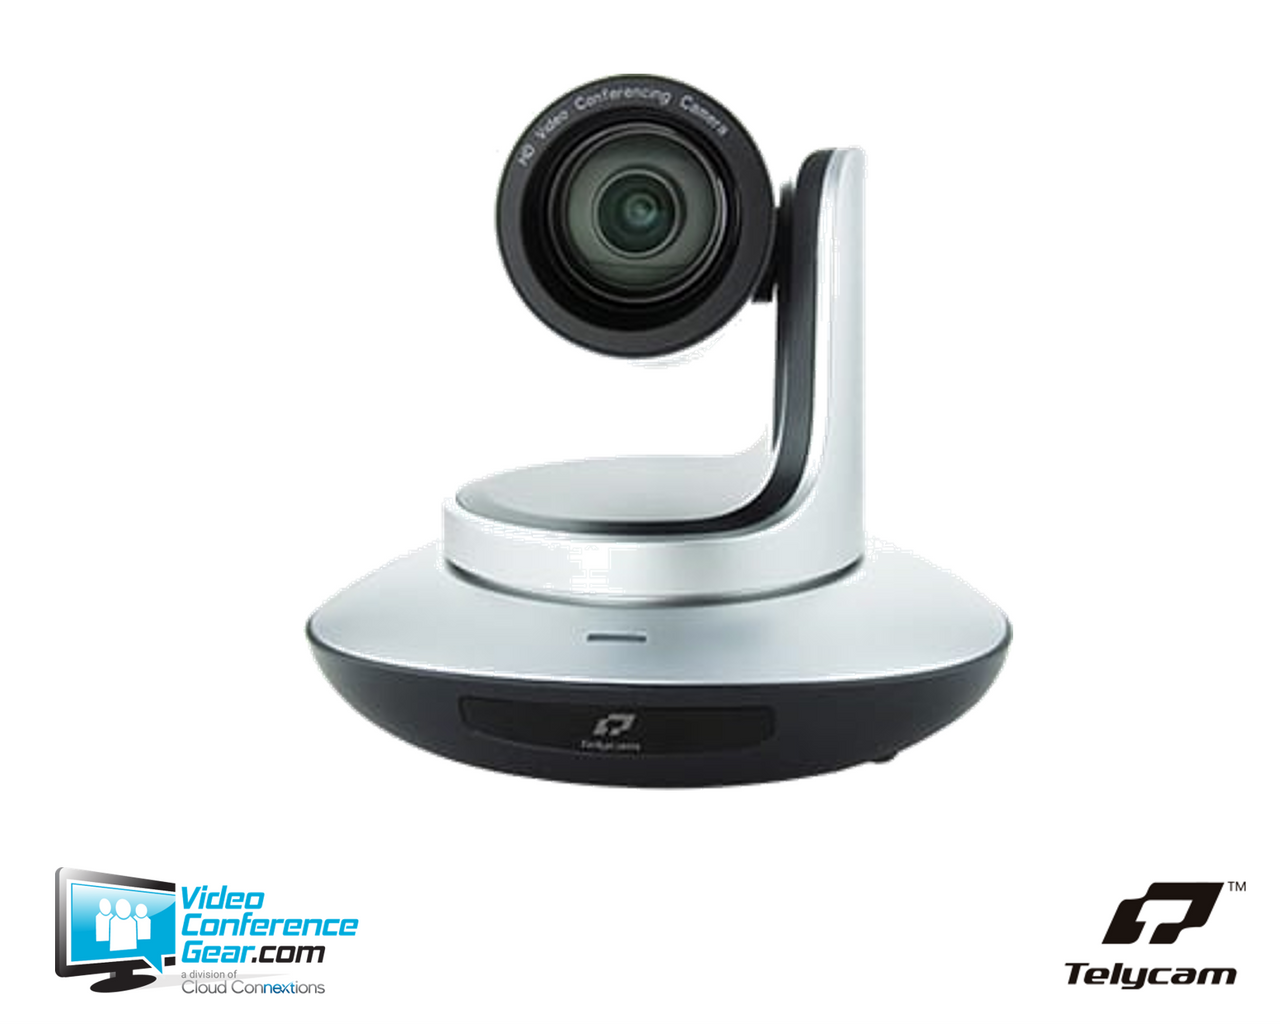 Telycam Meet 12 (USB3) | Professional PTZ Video Conferencing Camera Full HD 1080p, 12x Zoom, 72.5 FOV, USB 3.0 (TLC-300-U3-12)